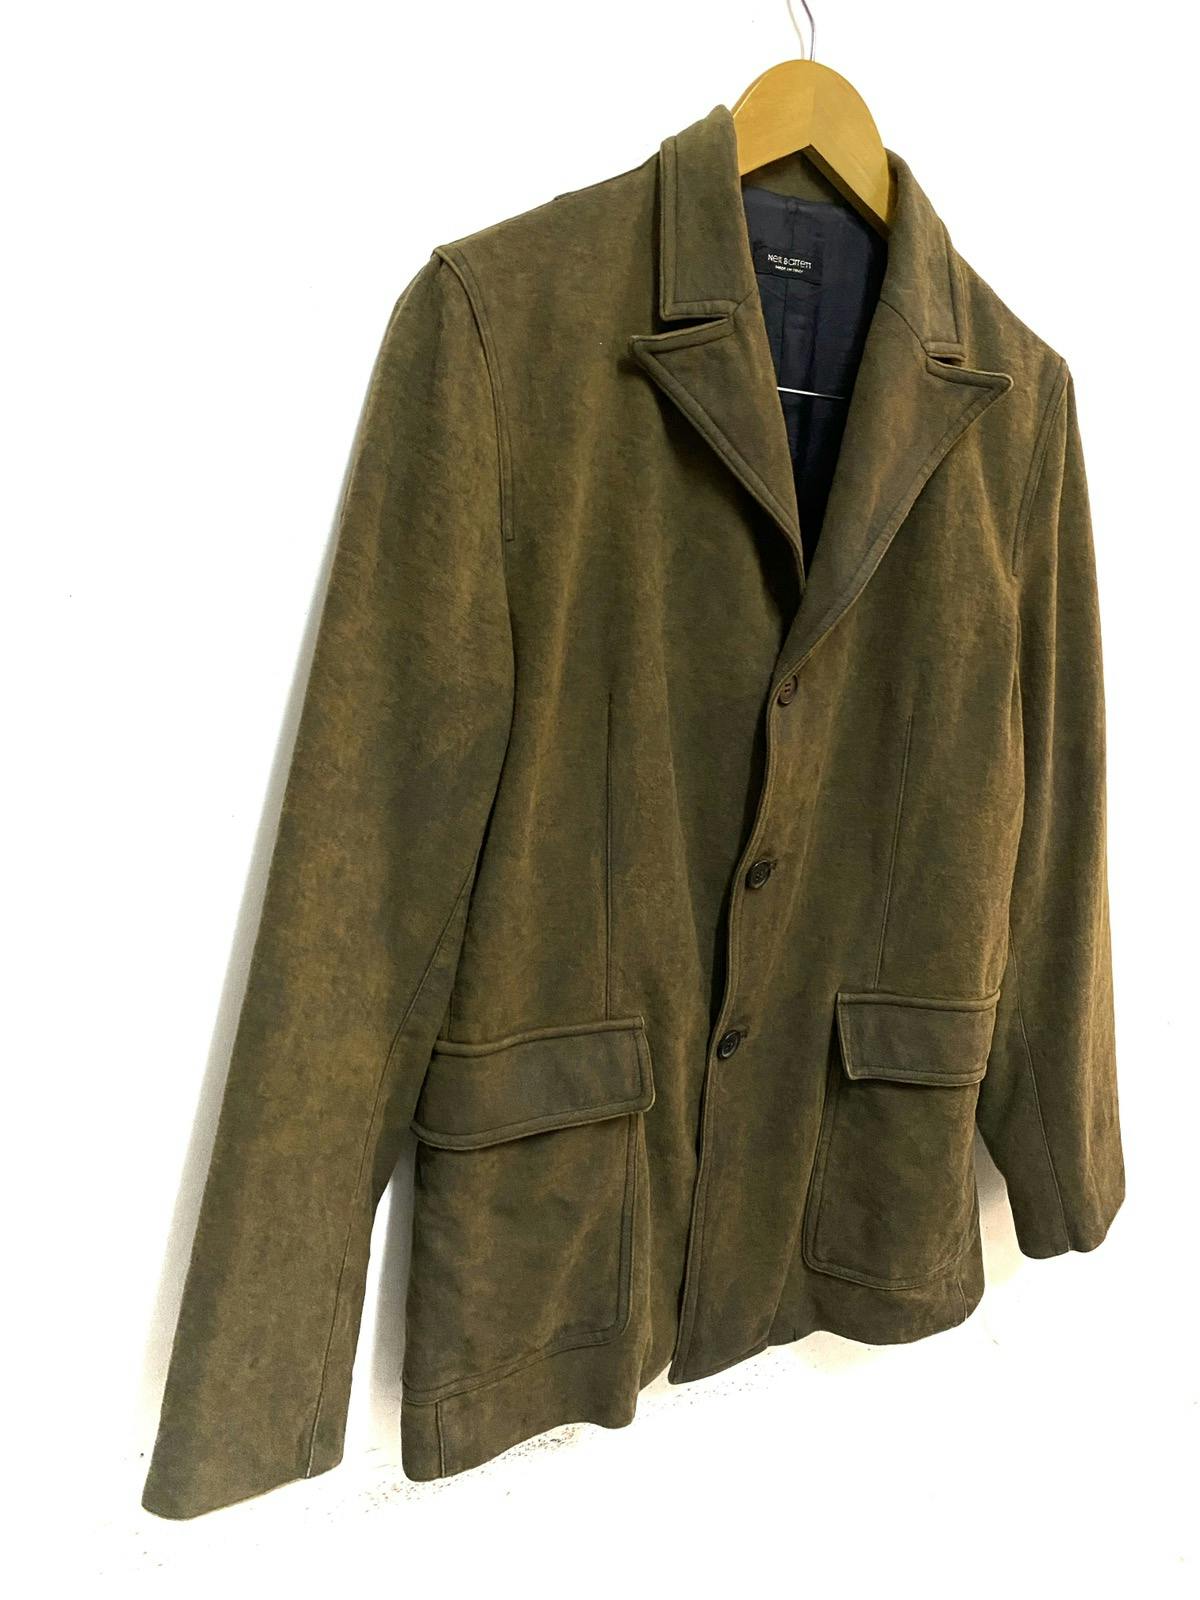 Neil Barrett Jacket Coat Blazer Made in Italy - 3